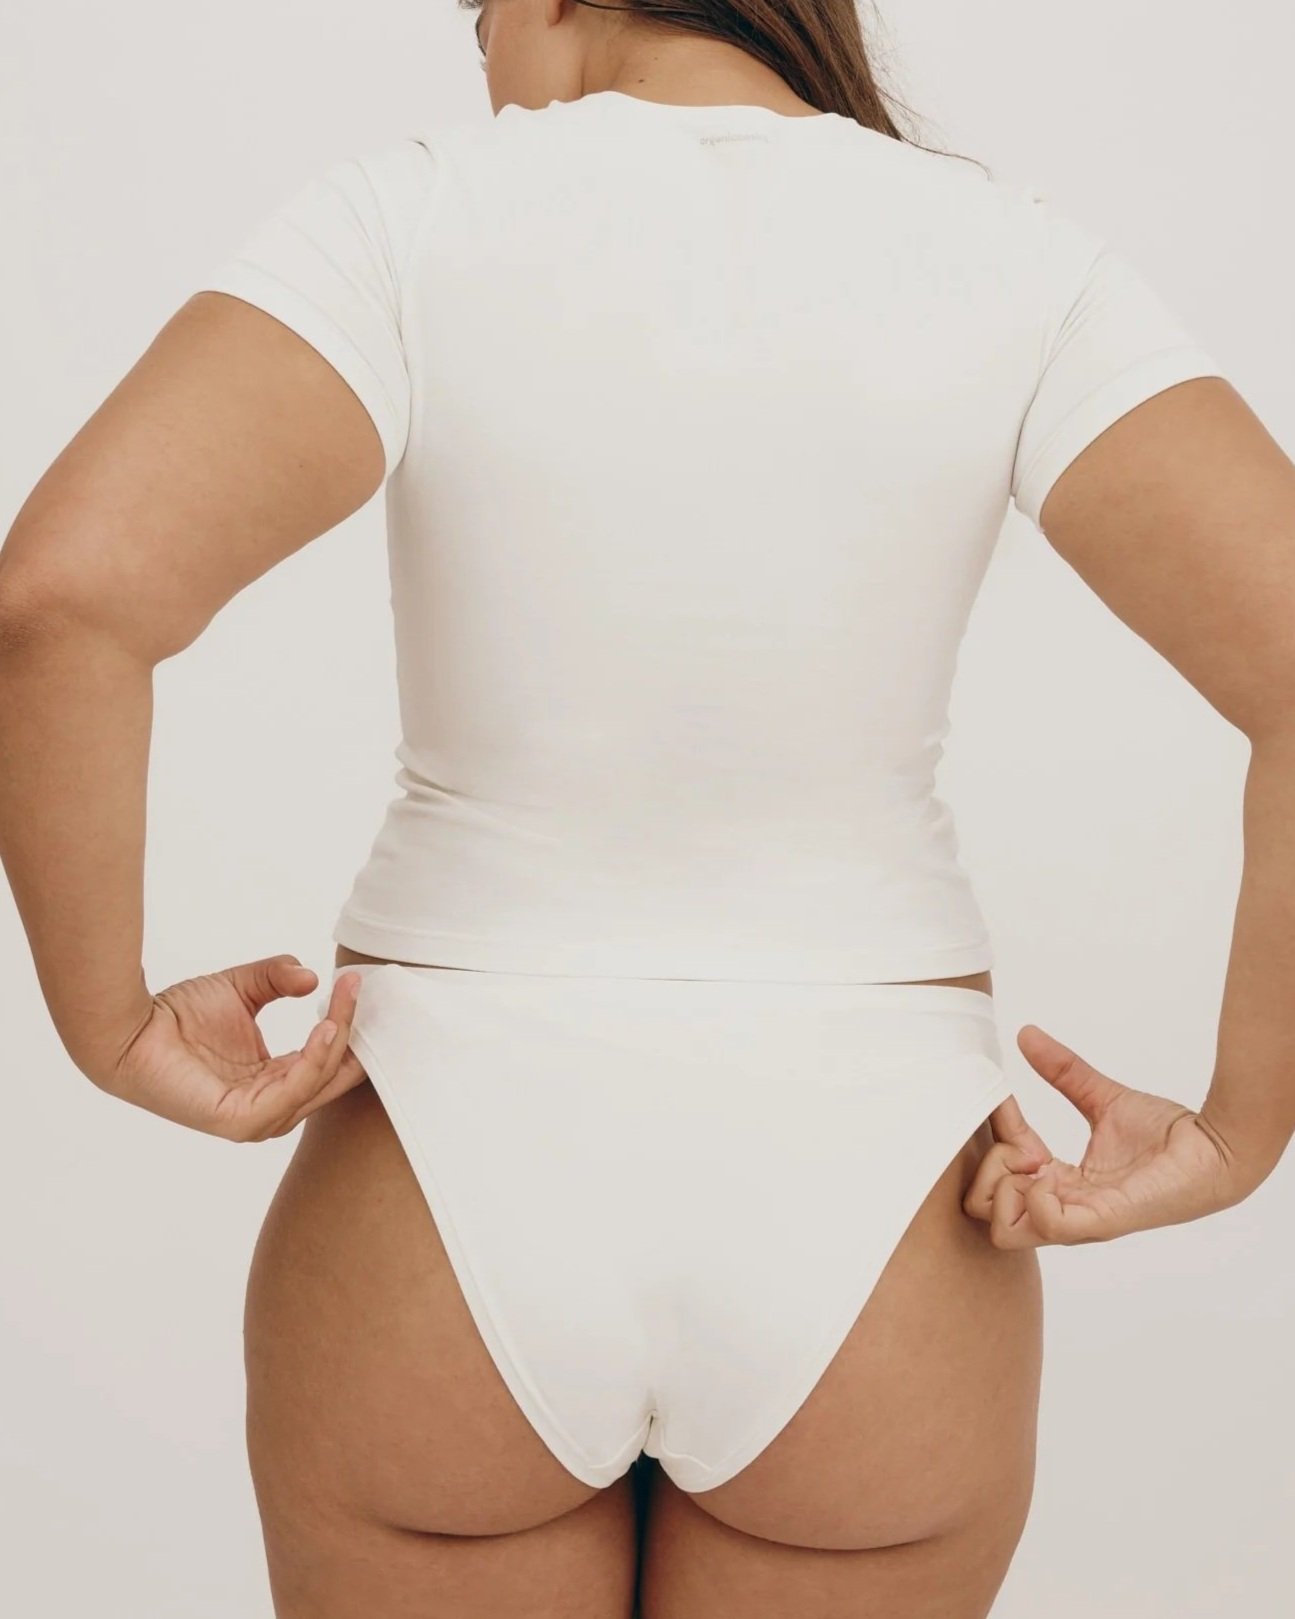 Best Underwear For Body Type: How To Choose – WAMA Underwear